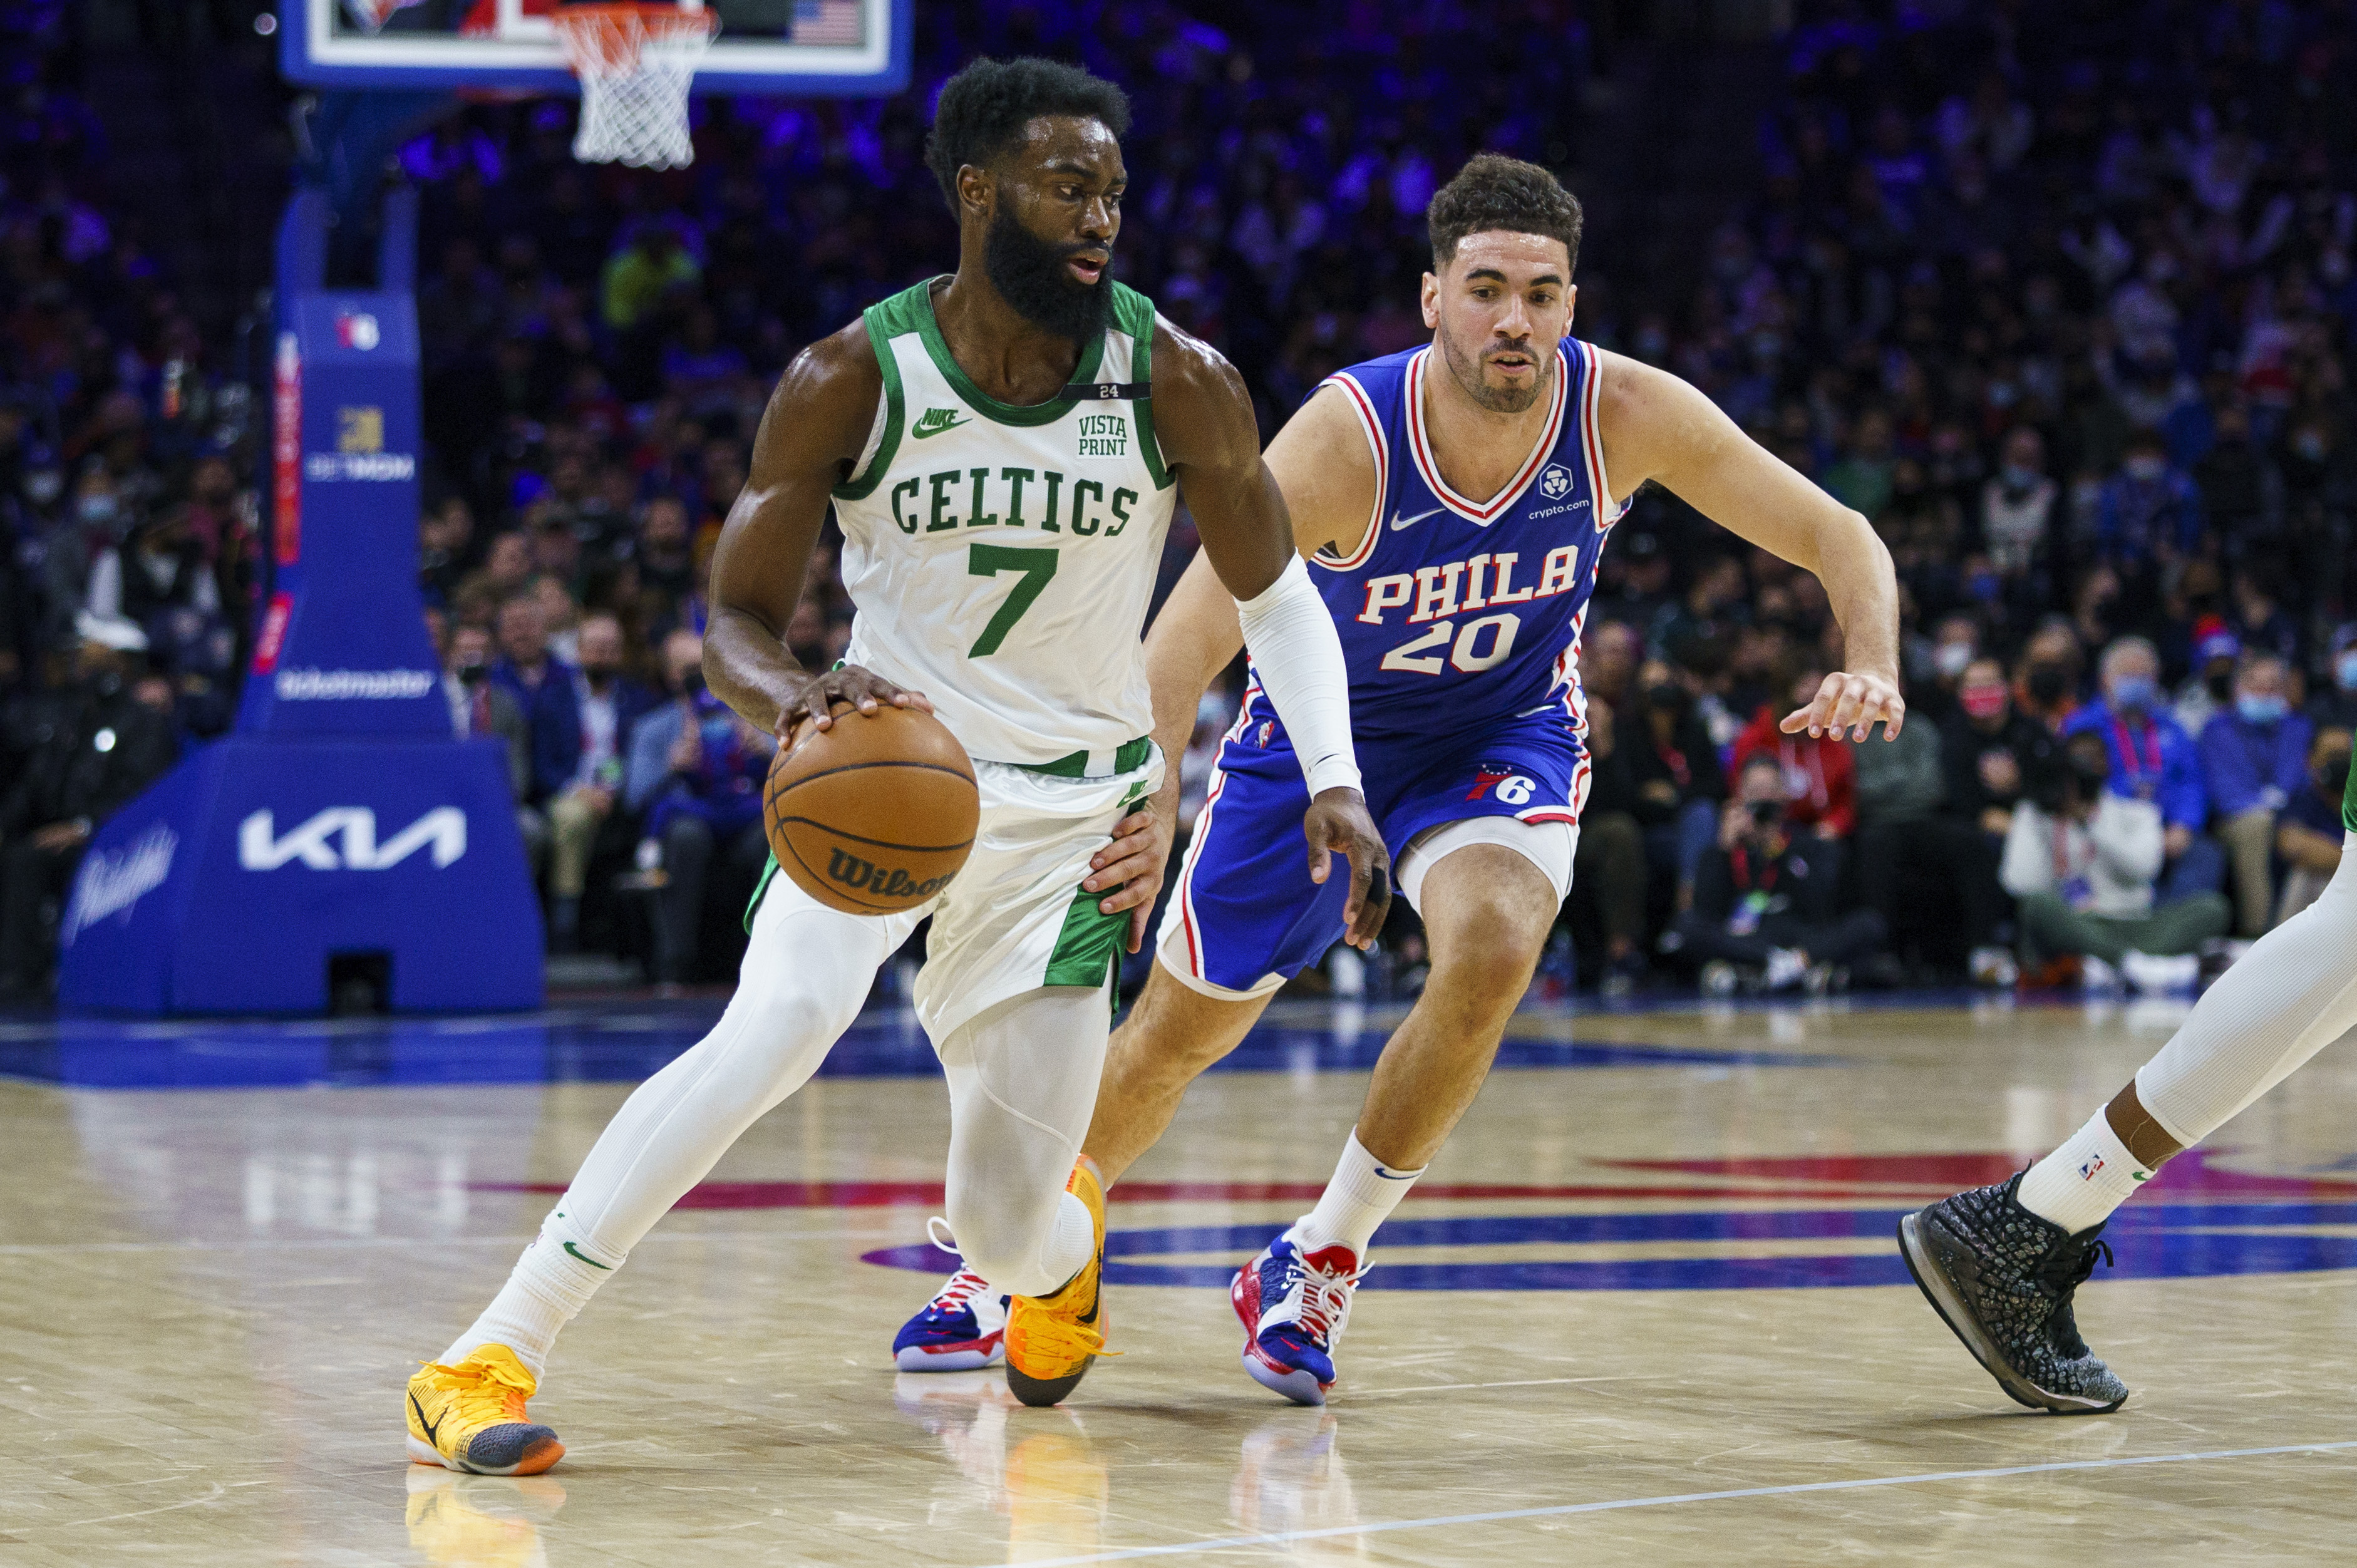 Philadelphia 76ers vs. Boston Celtics Game 6 FREE LIVE STREAM (5